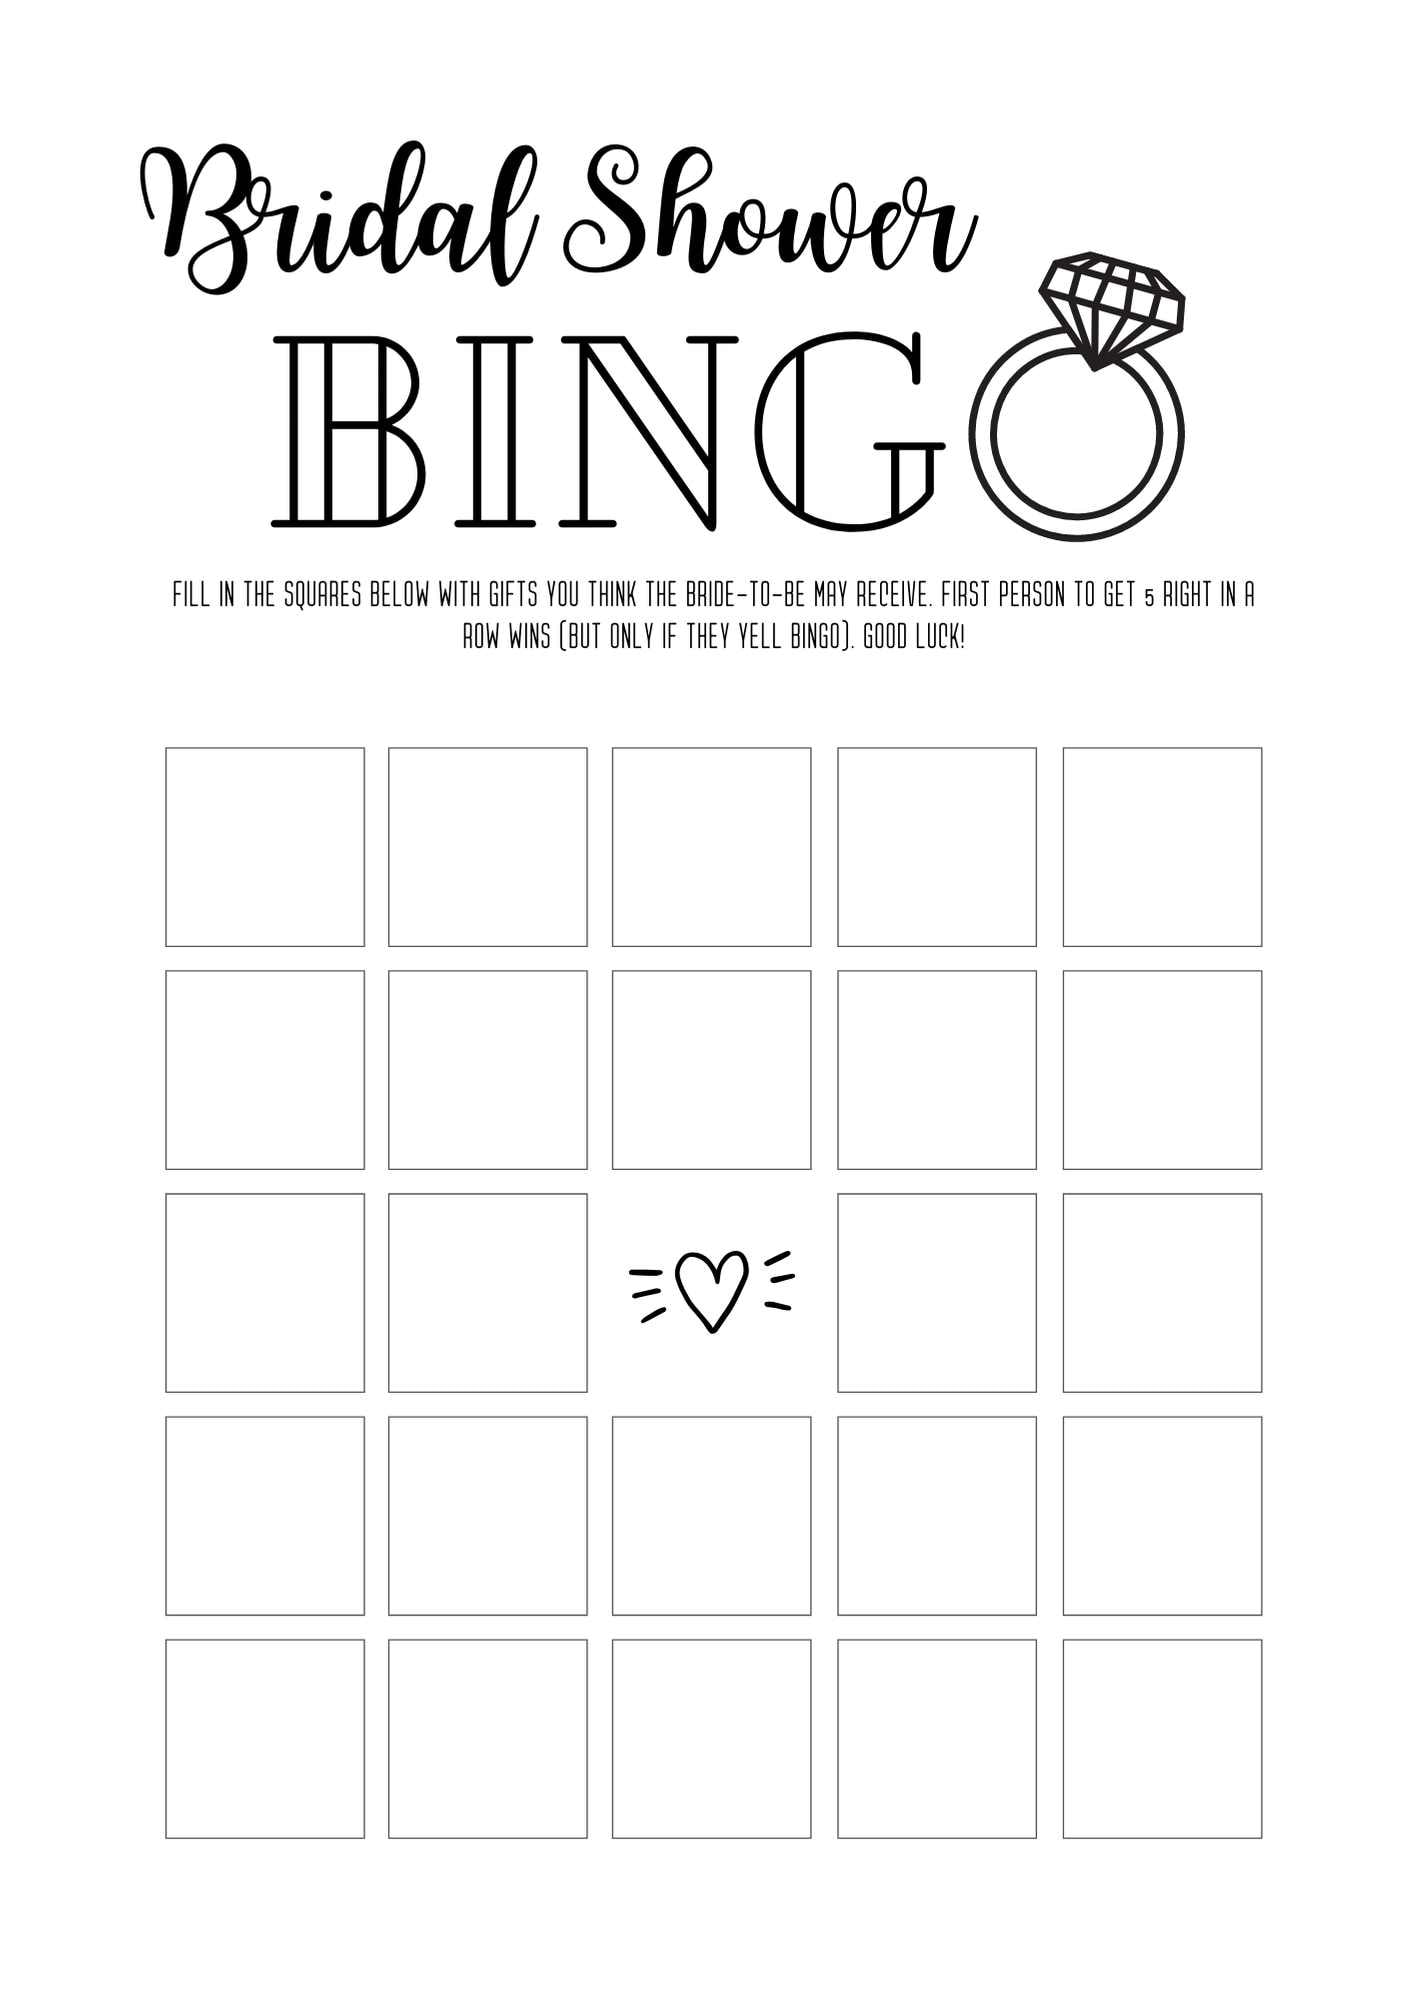 Fun Interactive Bridal Shower Bingo Printable